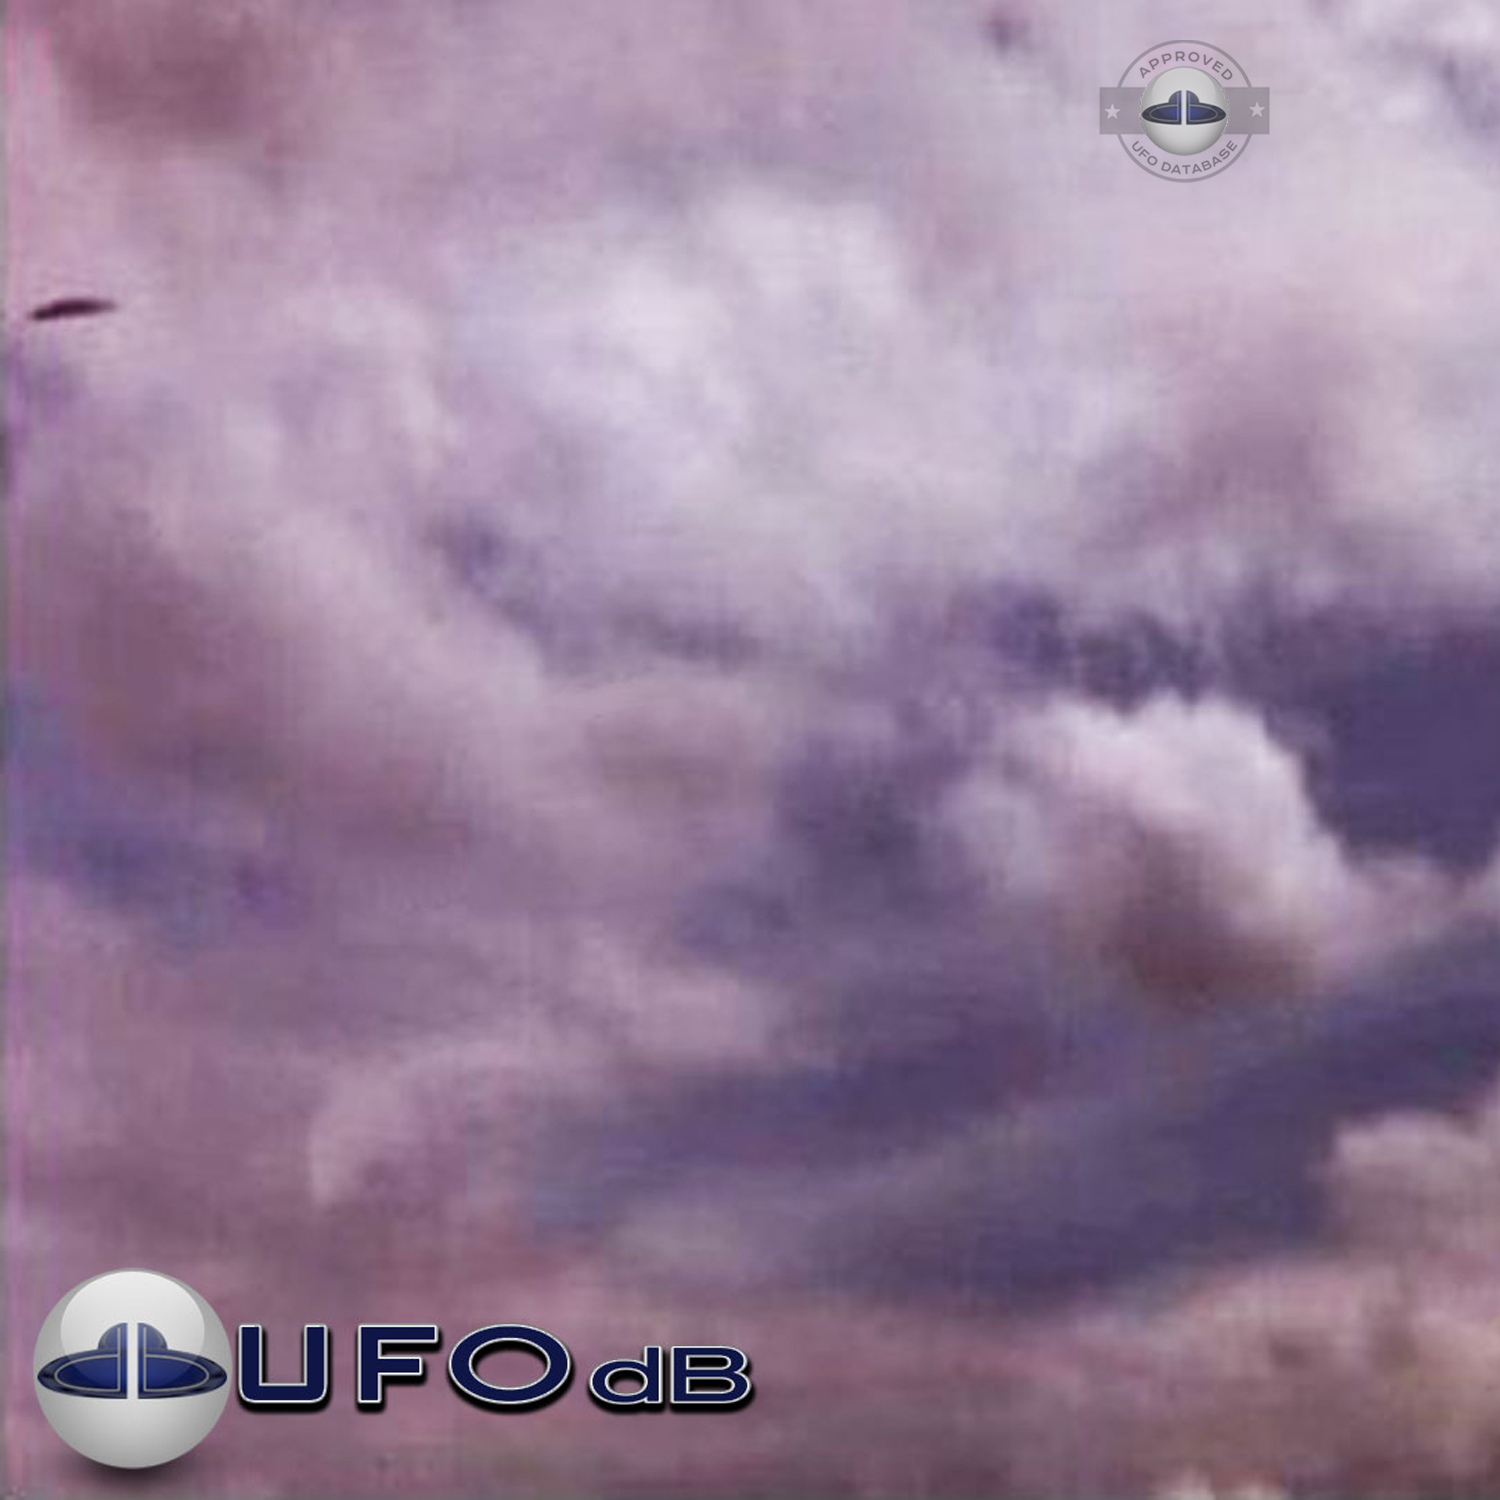 Rudi Nagora heard a strange noise and saw a shinning silver UFO UFO Picture #81-2